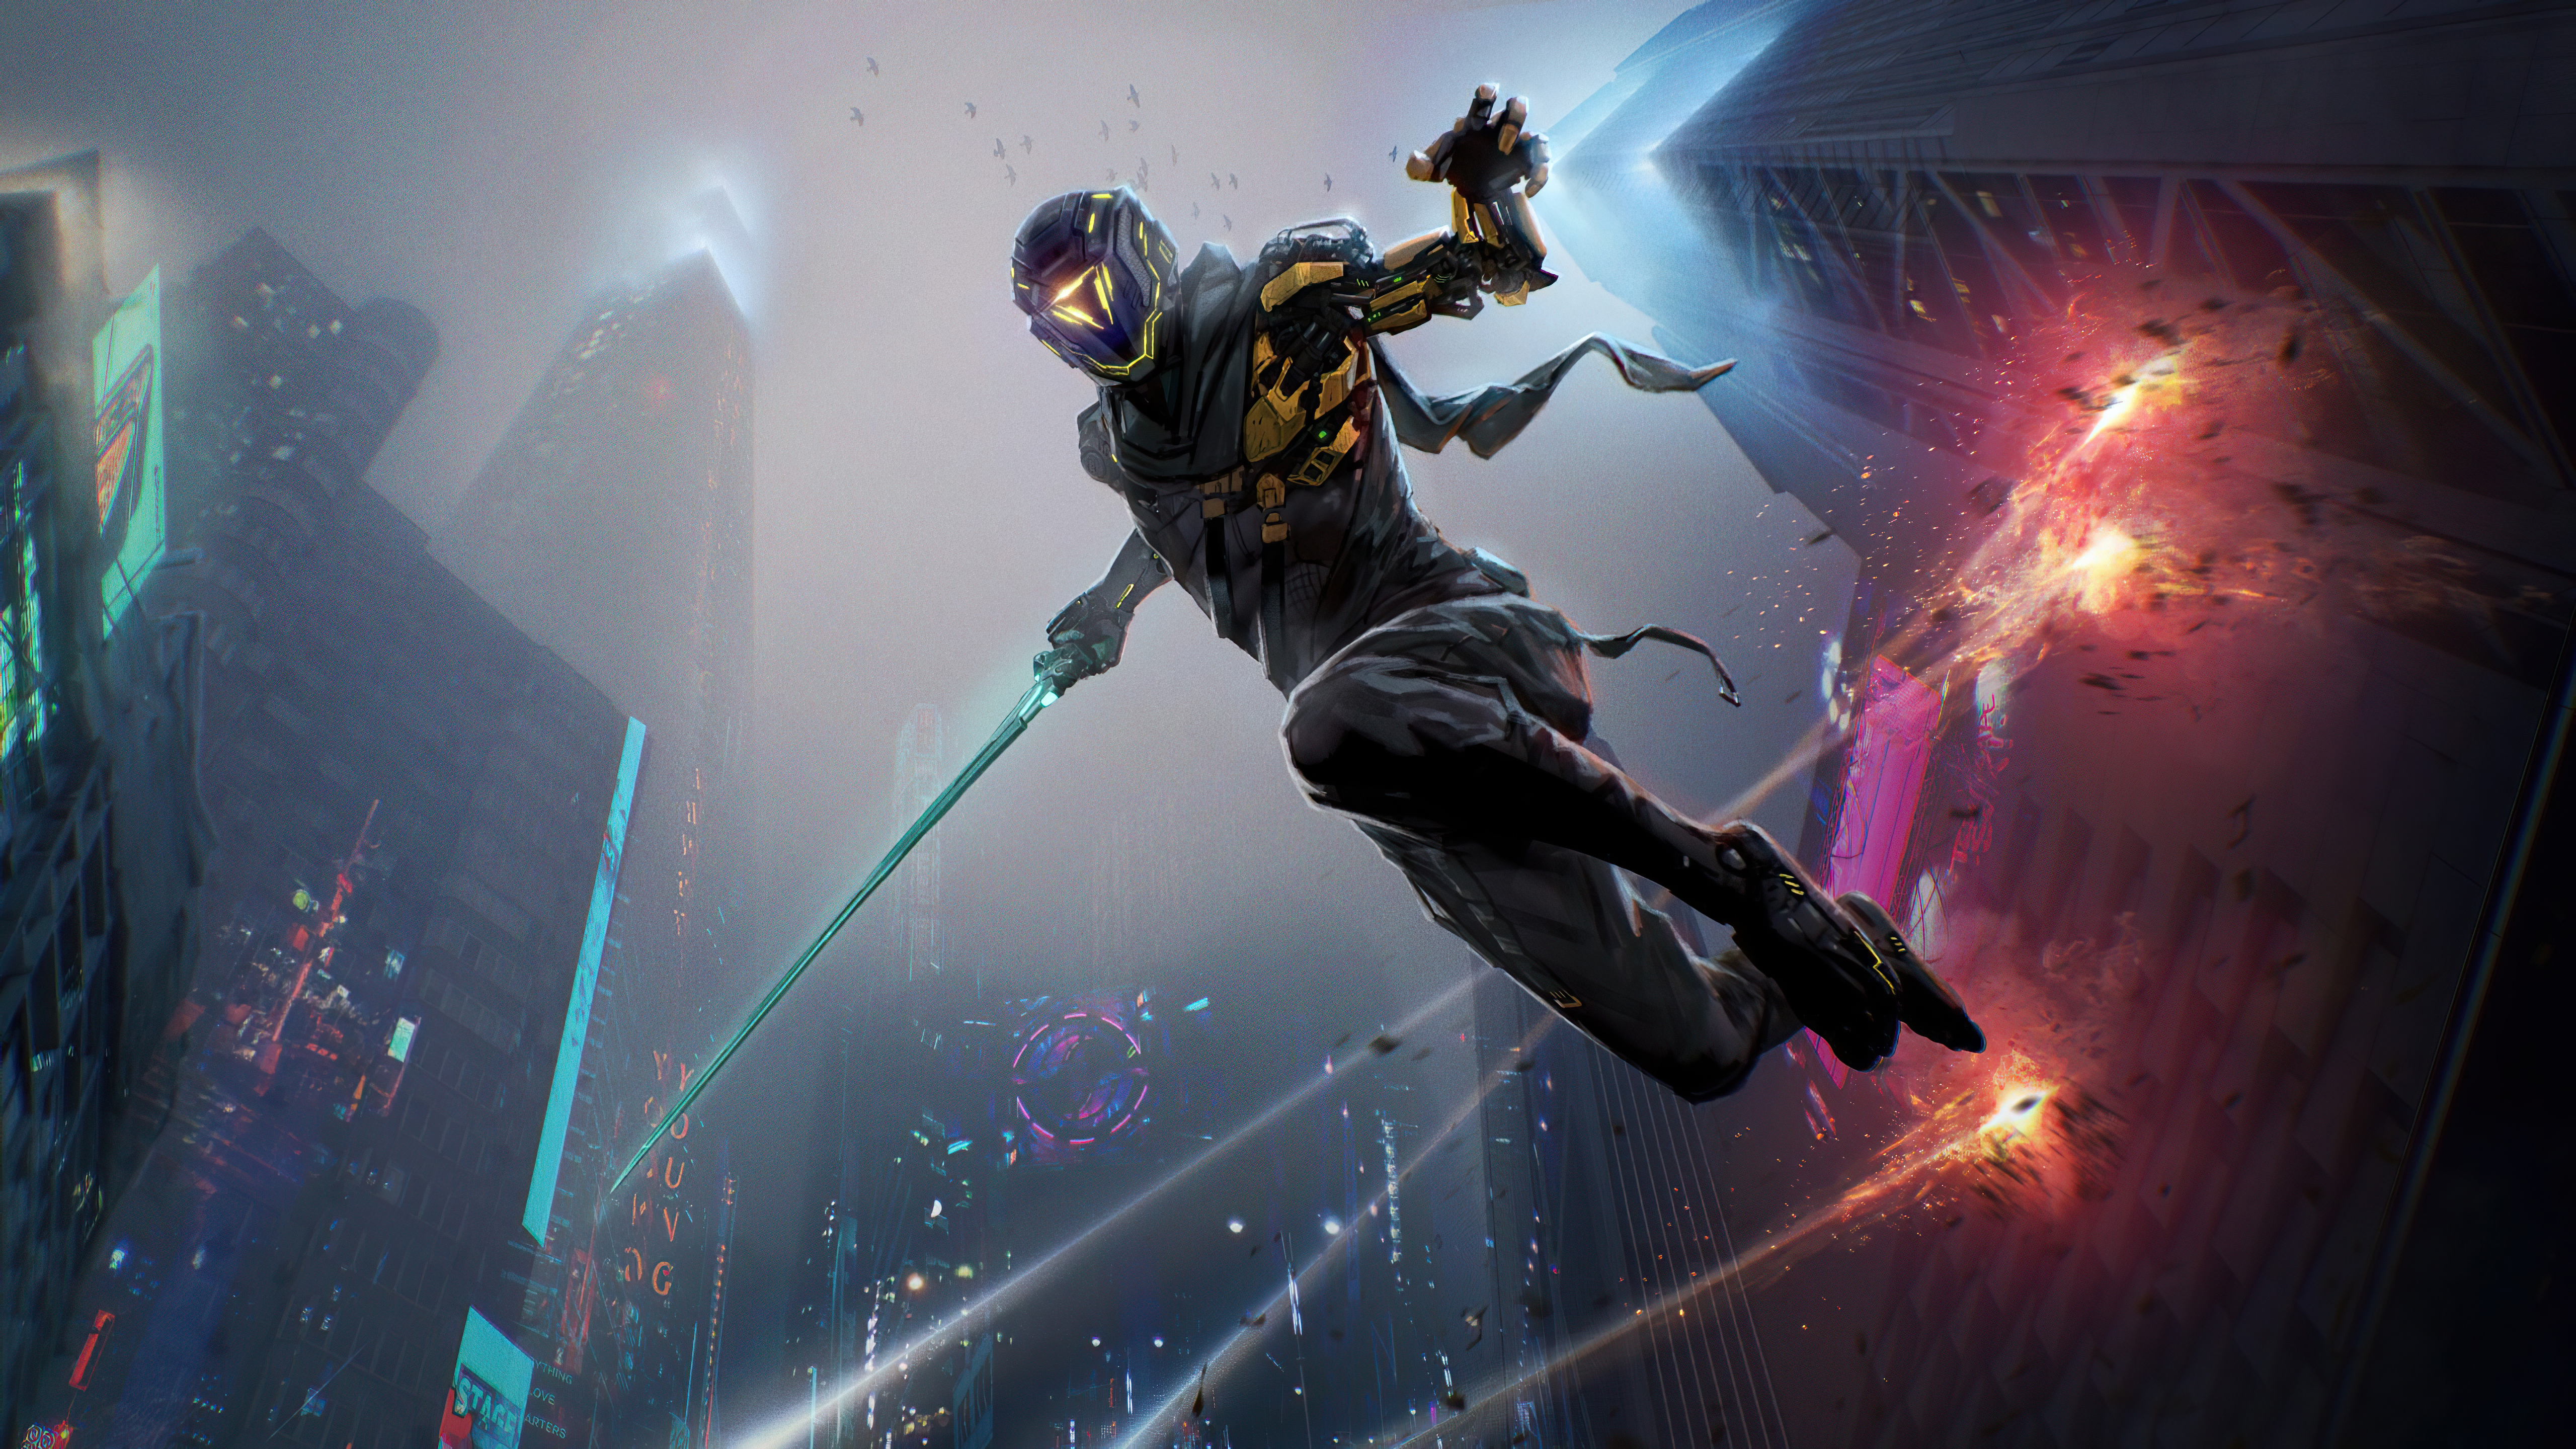 Ghostrunner Video Games Cyberpunk Science Fiction Katana Weapon Futuristic Cyborg Ninja Video Game C 5120x2880